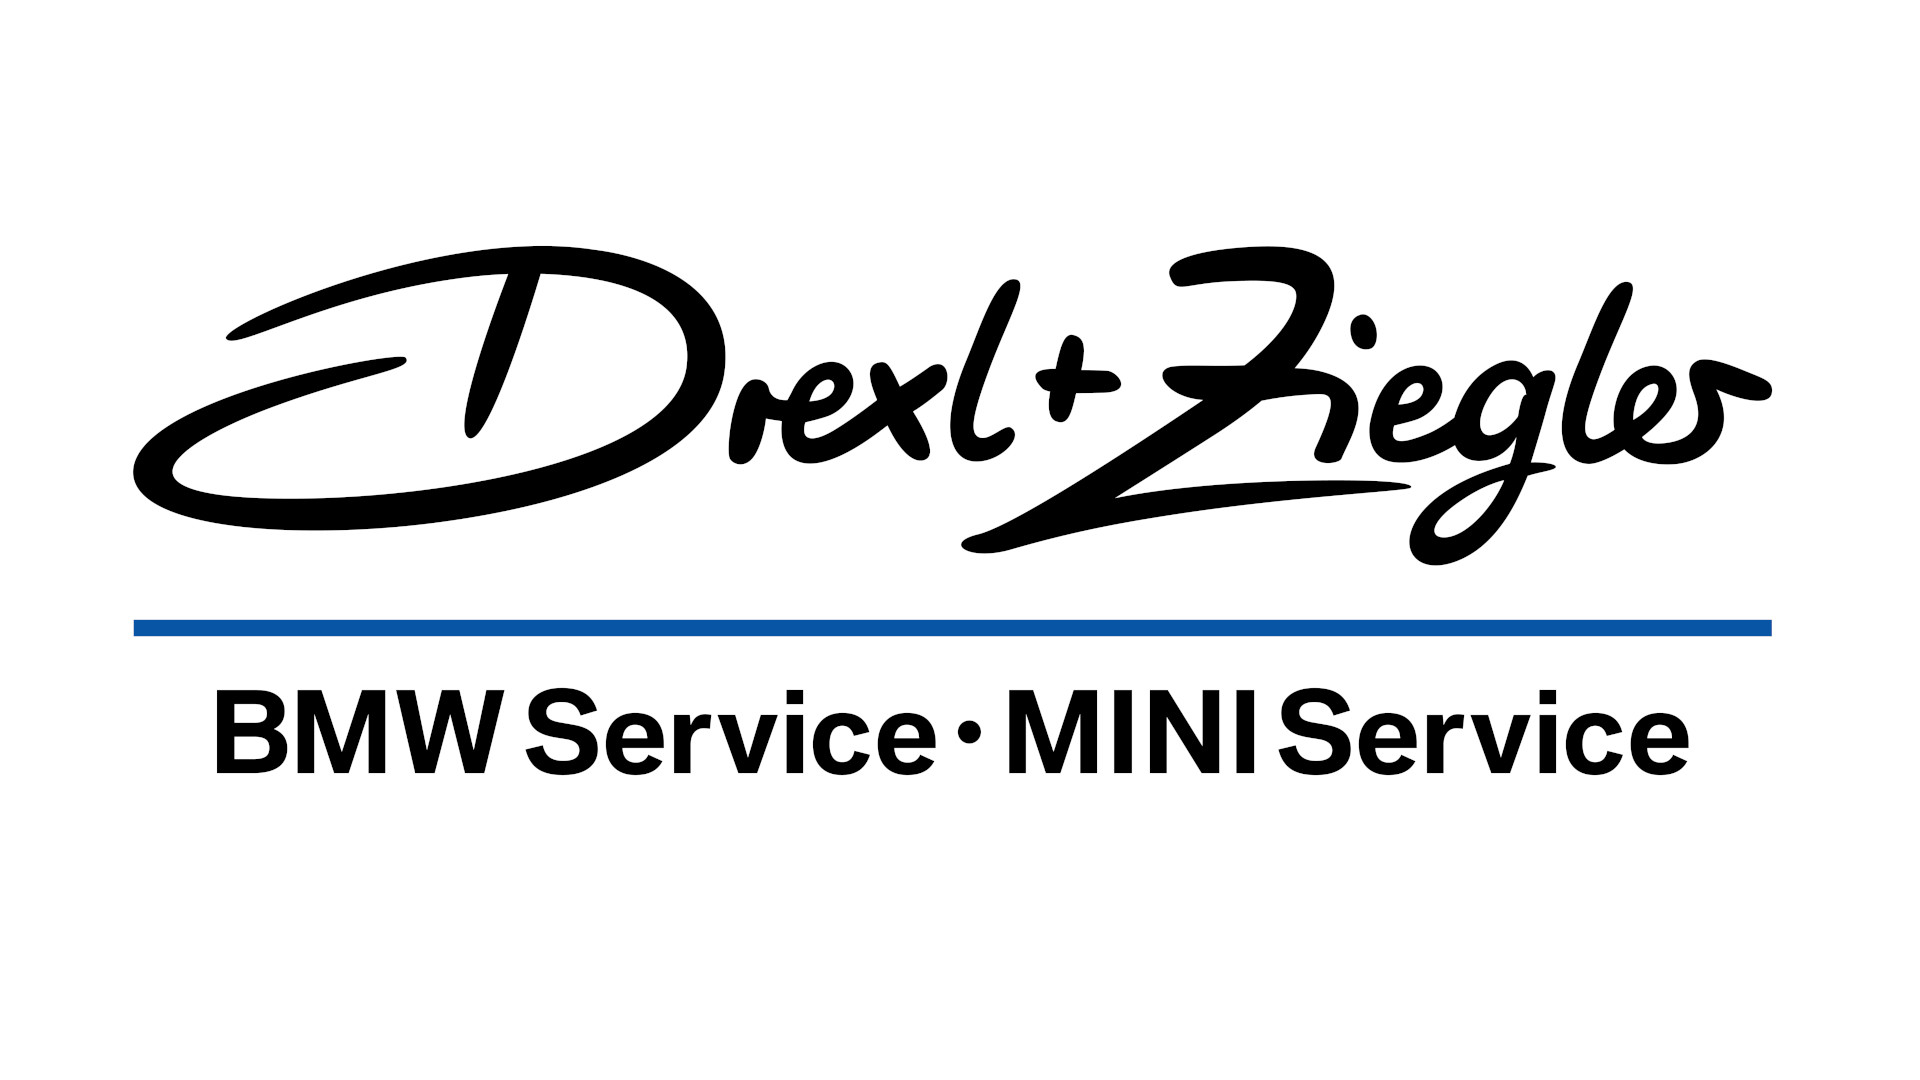 Drexl + Ziegler GmbH & Co. KG